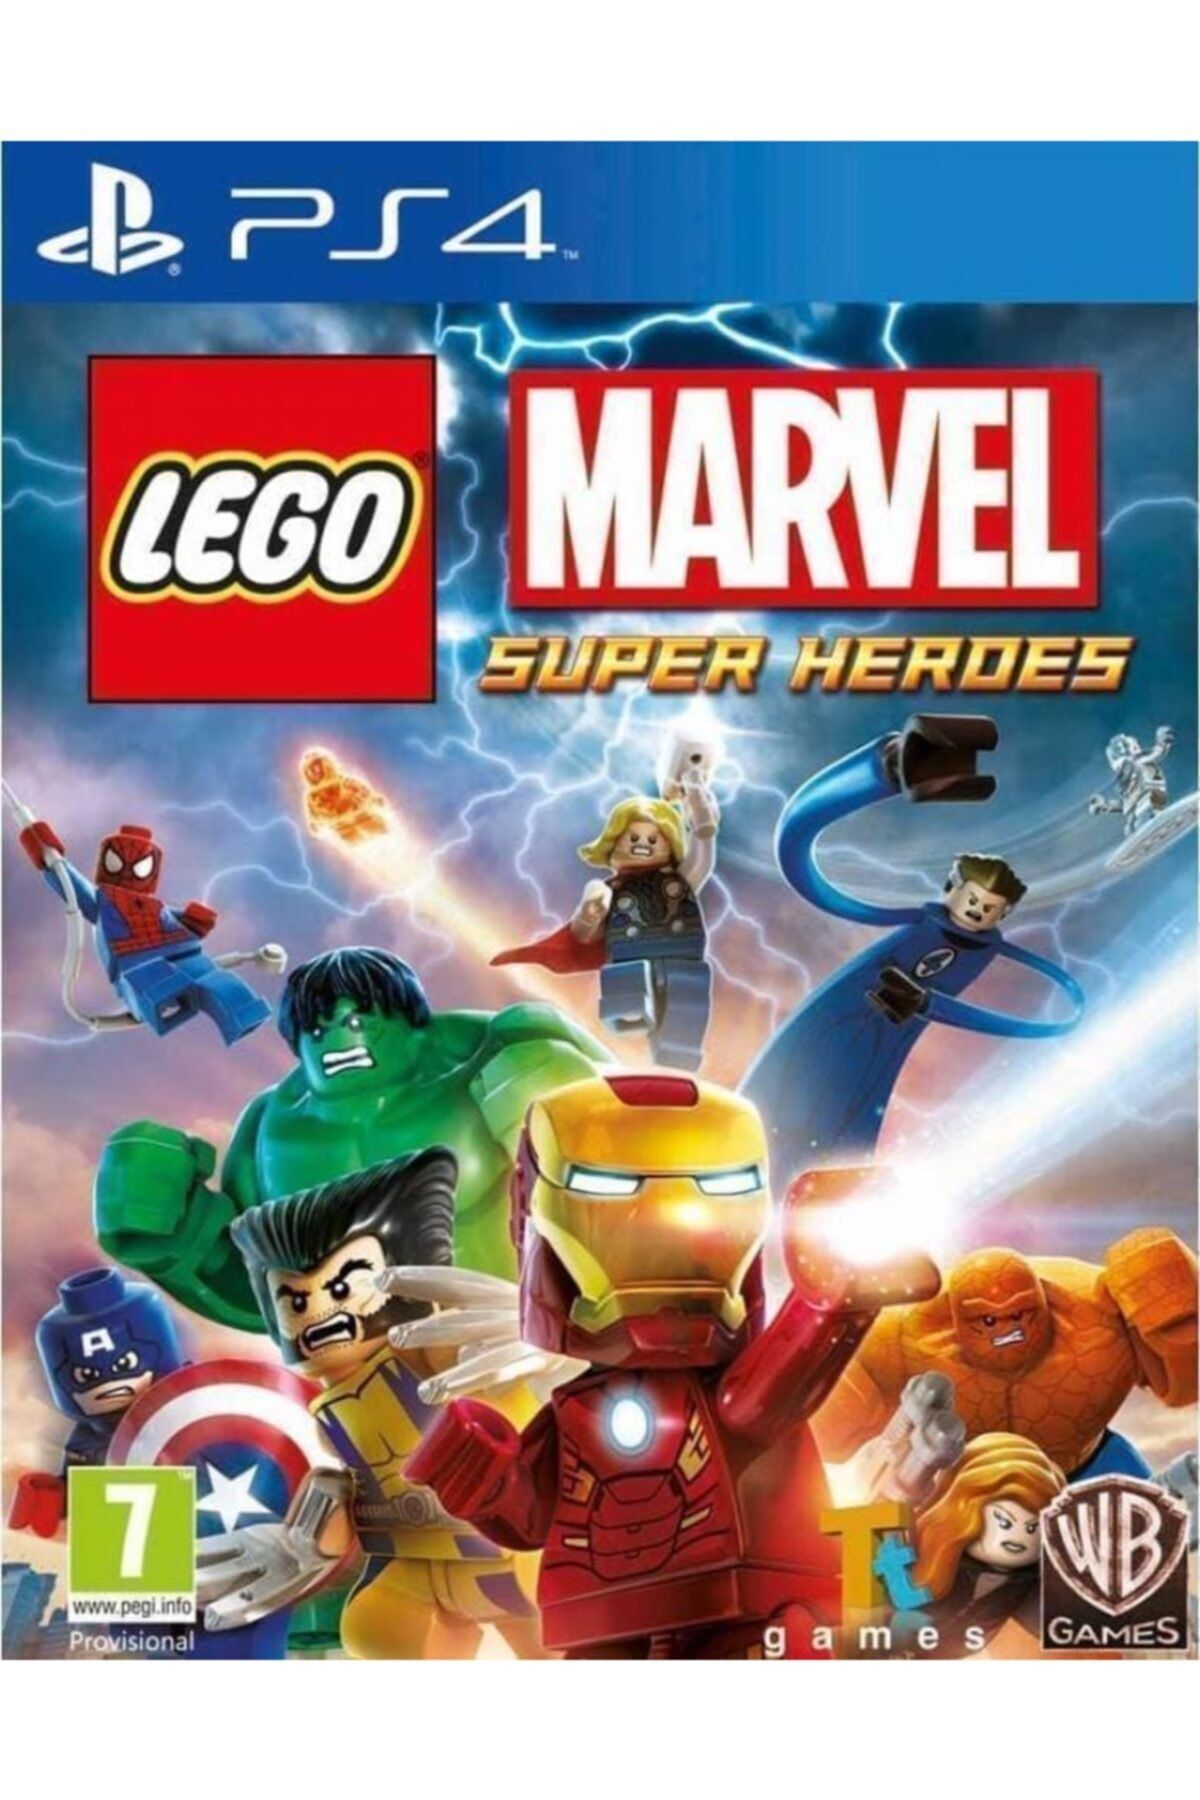 Wb Games Ps4 Lego Marvel Super Heroes